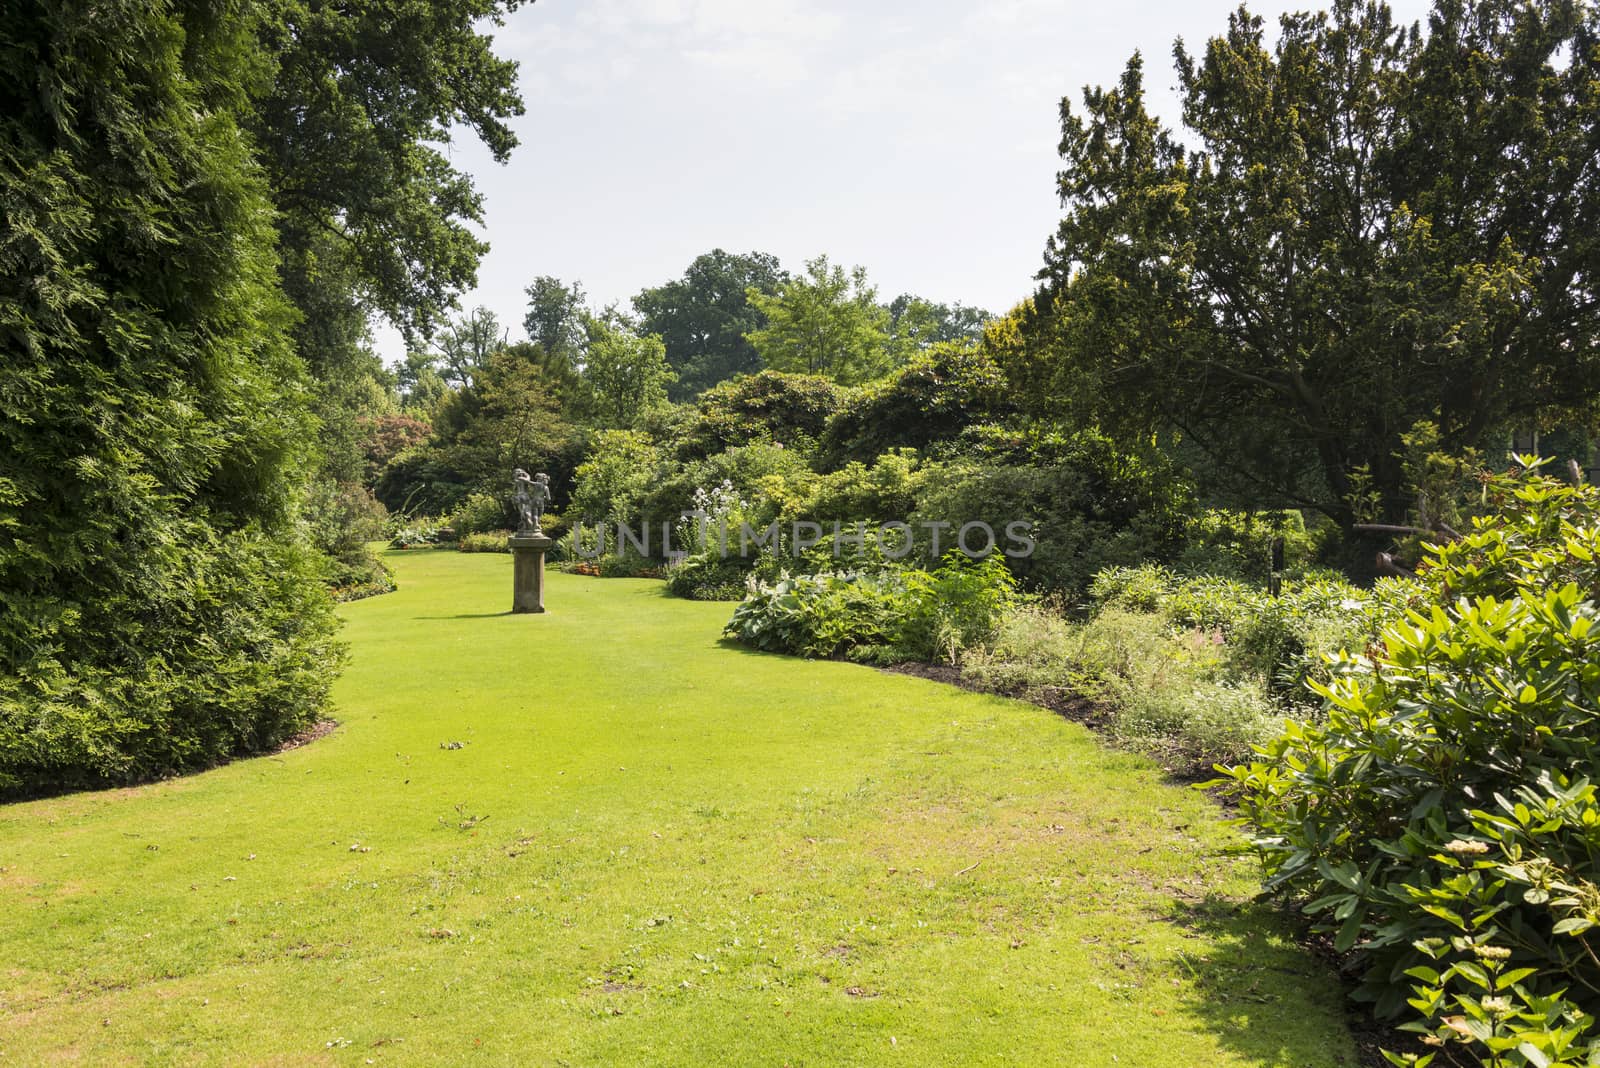 english border green grass garden by compuinfoto